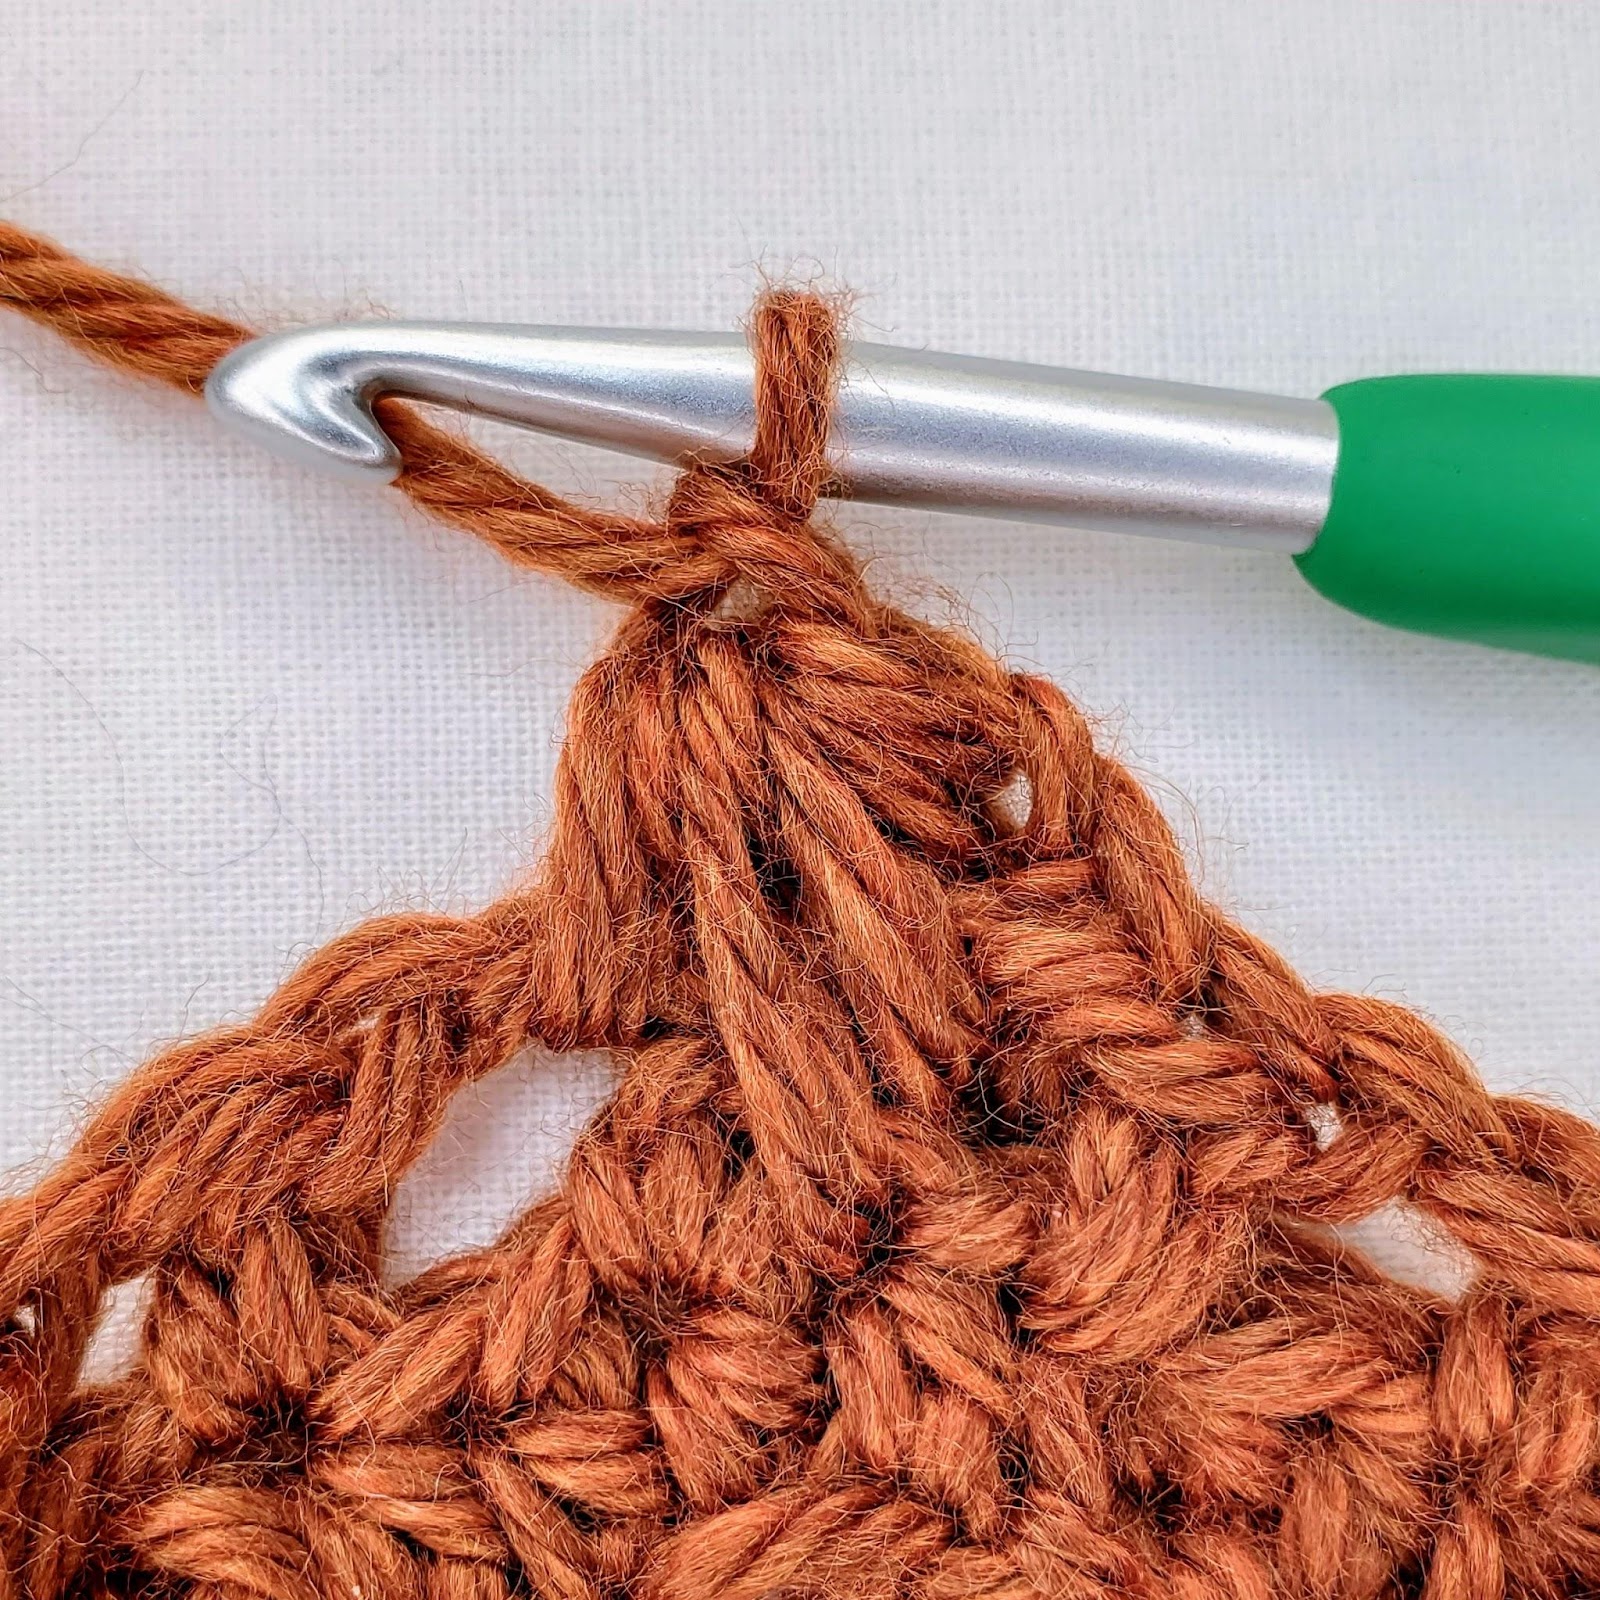 The Feather Stitch - Crochet Stitch Tutorial